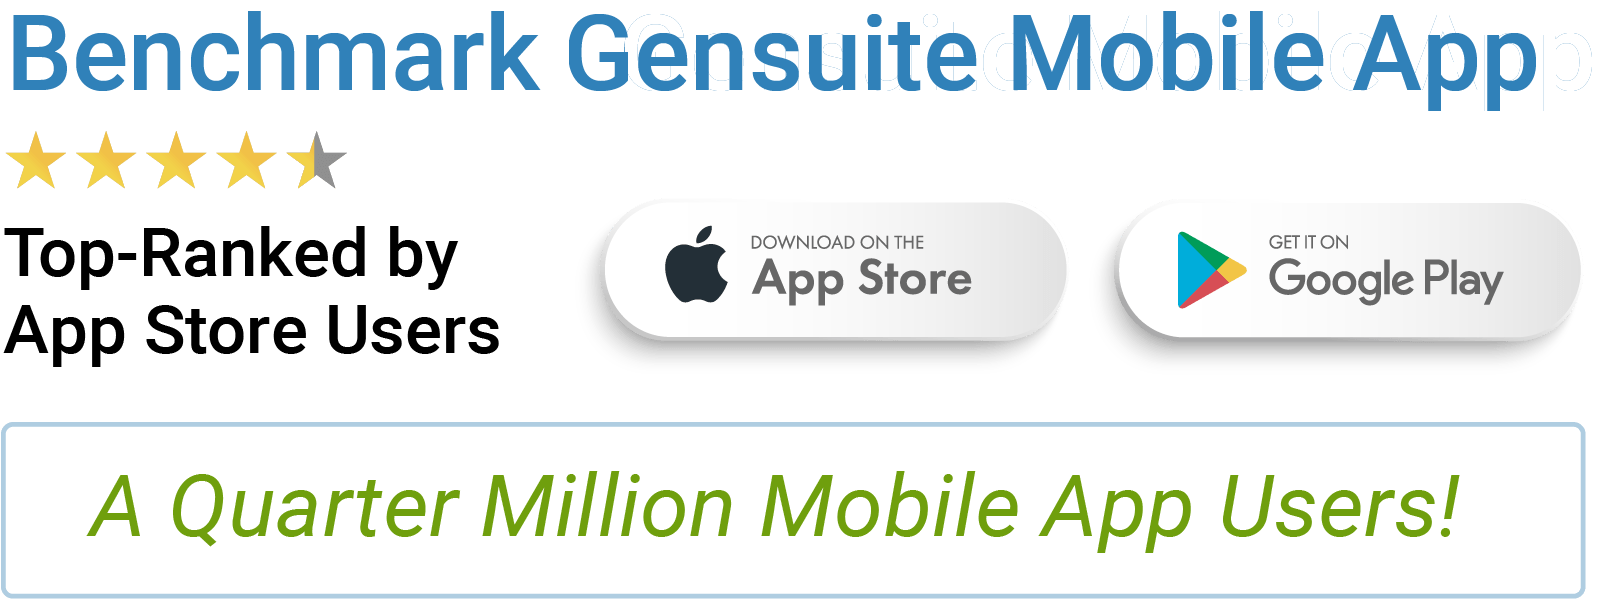 Benchmark Gensuite Mobile App